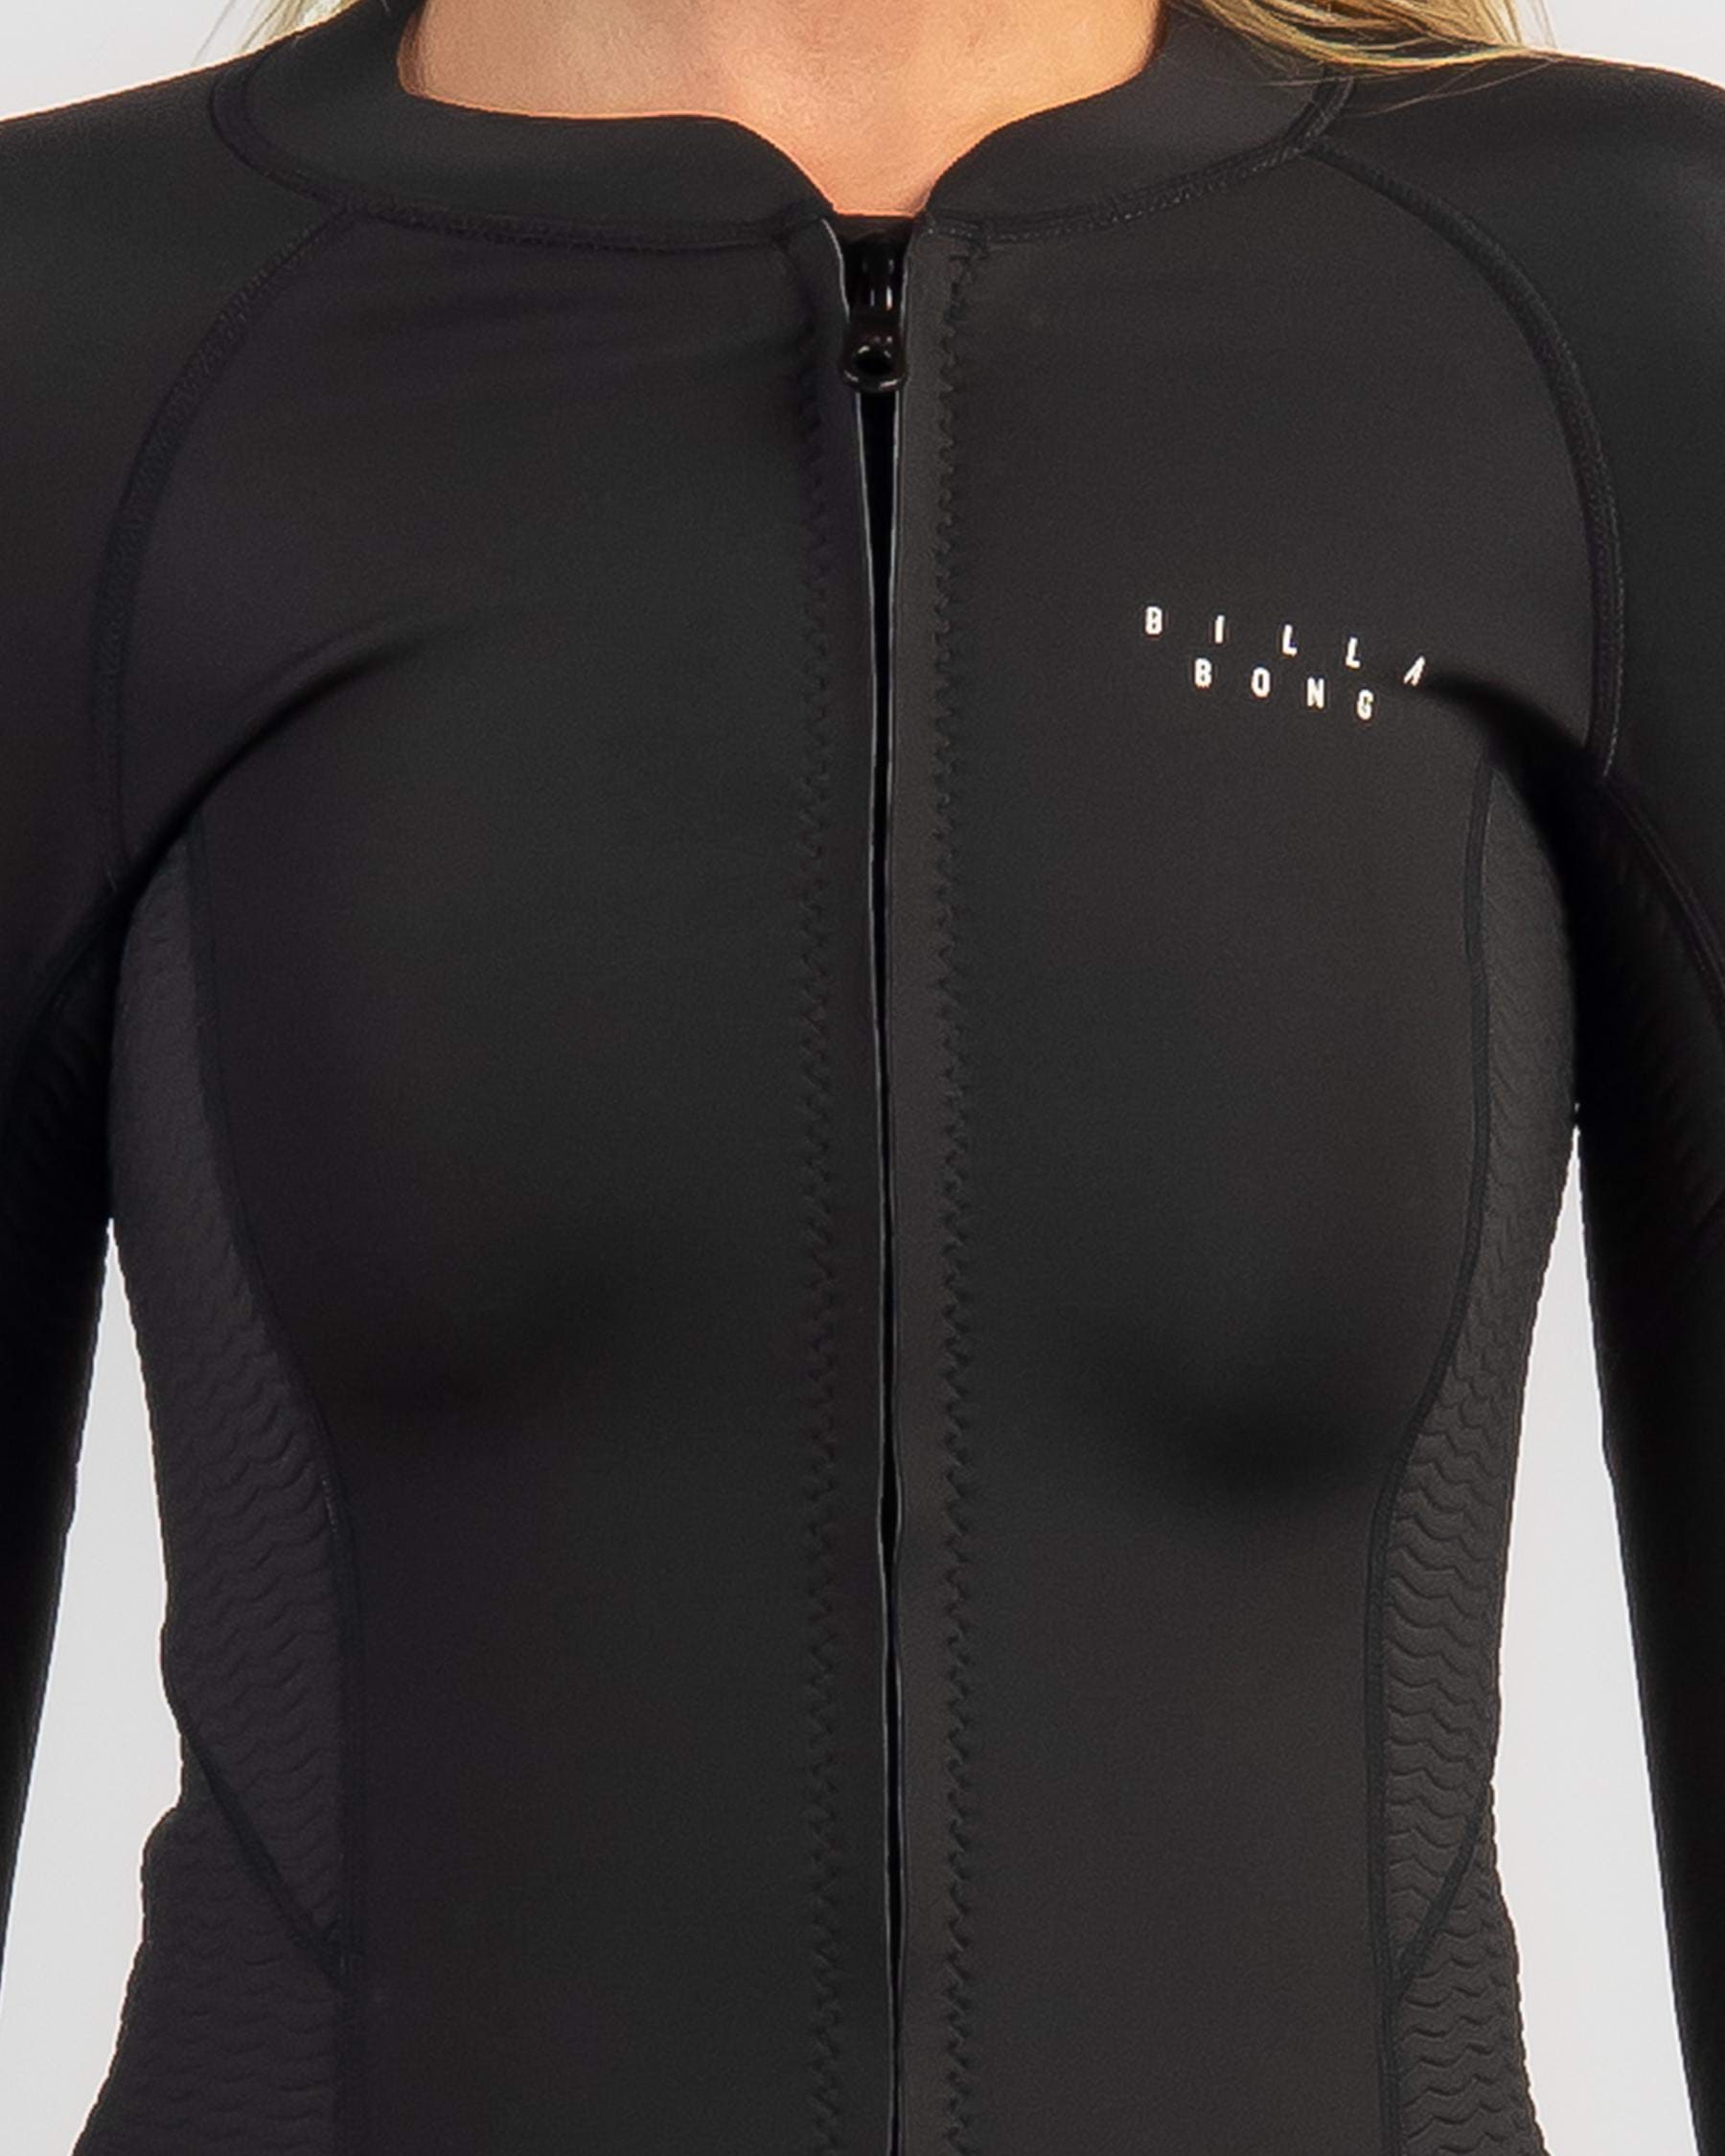 Billabong Peeky Long Sleeve Wetsuit Jacket In Black - Fast Shipping ...